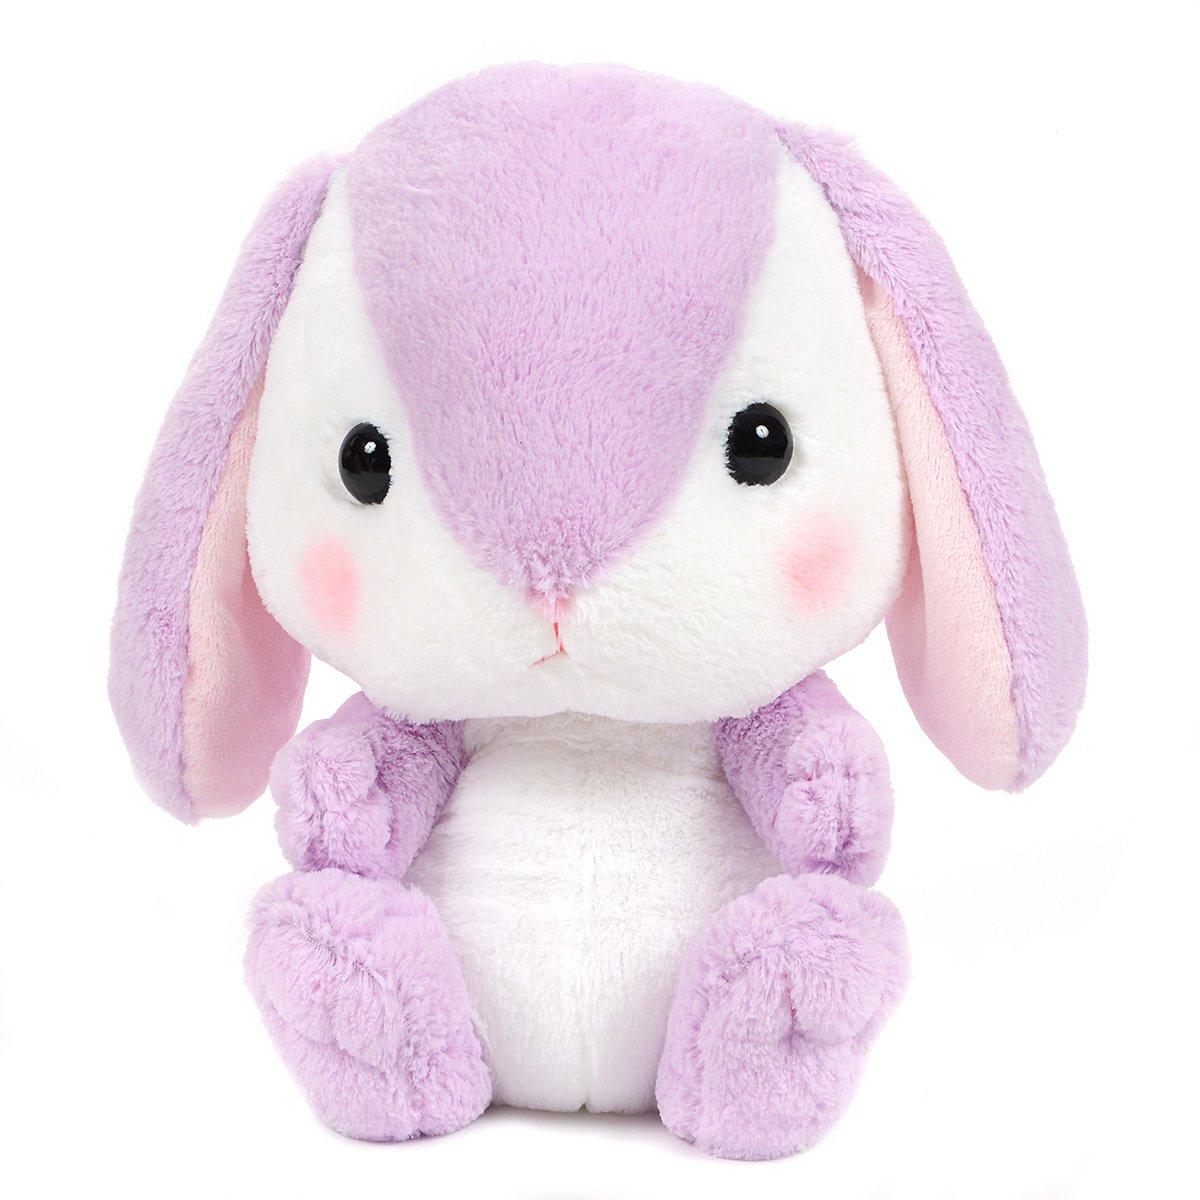 Amuse Bunny Plushie Cute Stuffed Animal Toy Purple / White Big Size